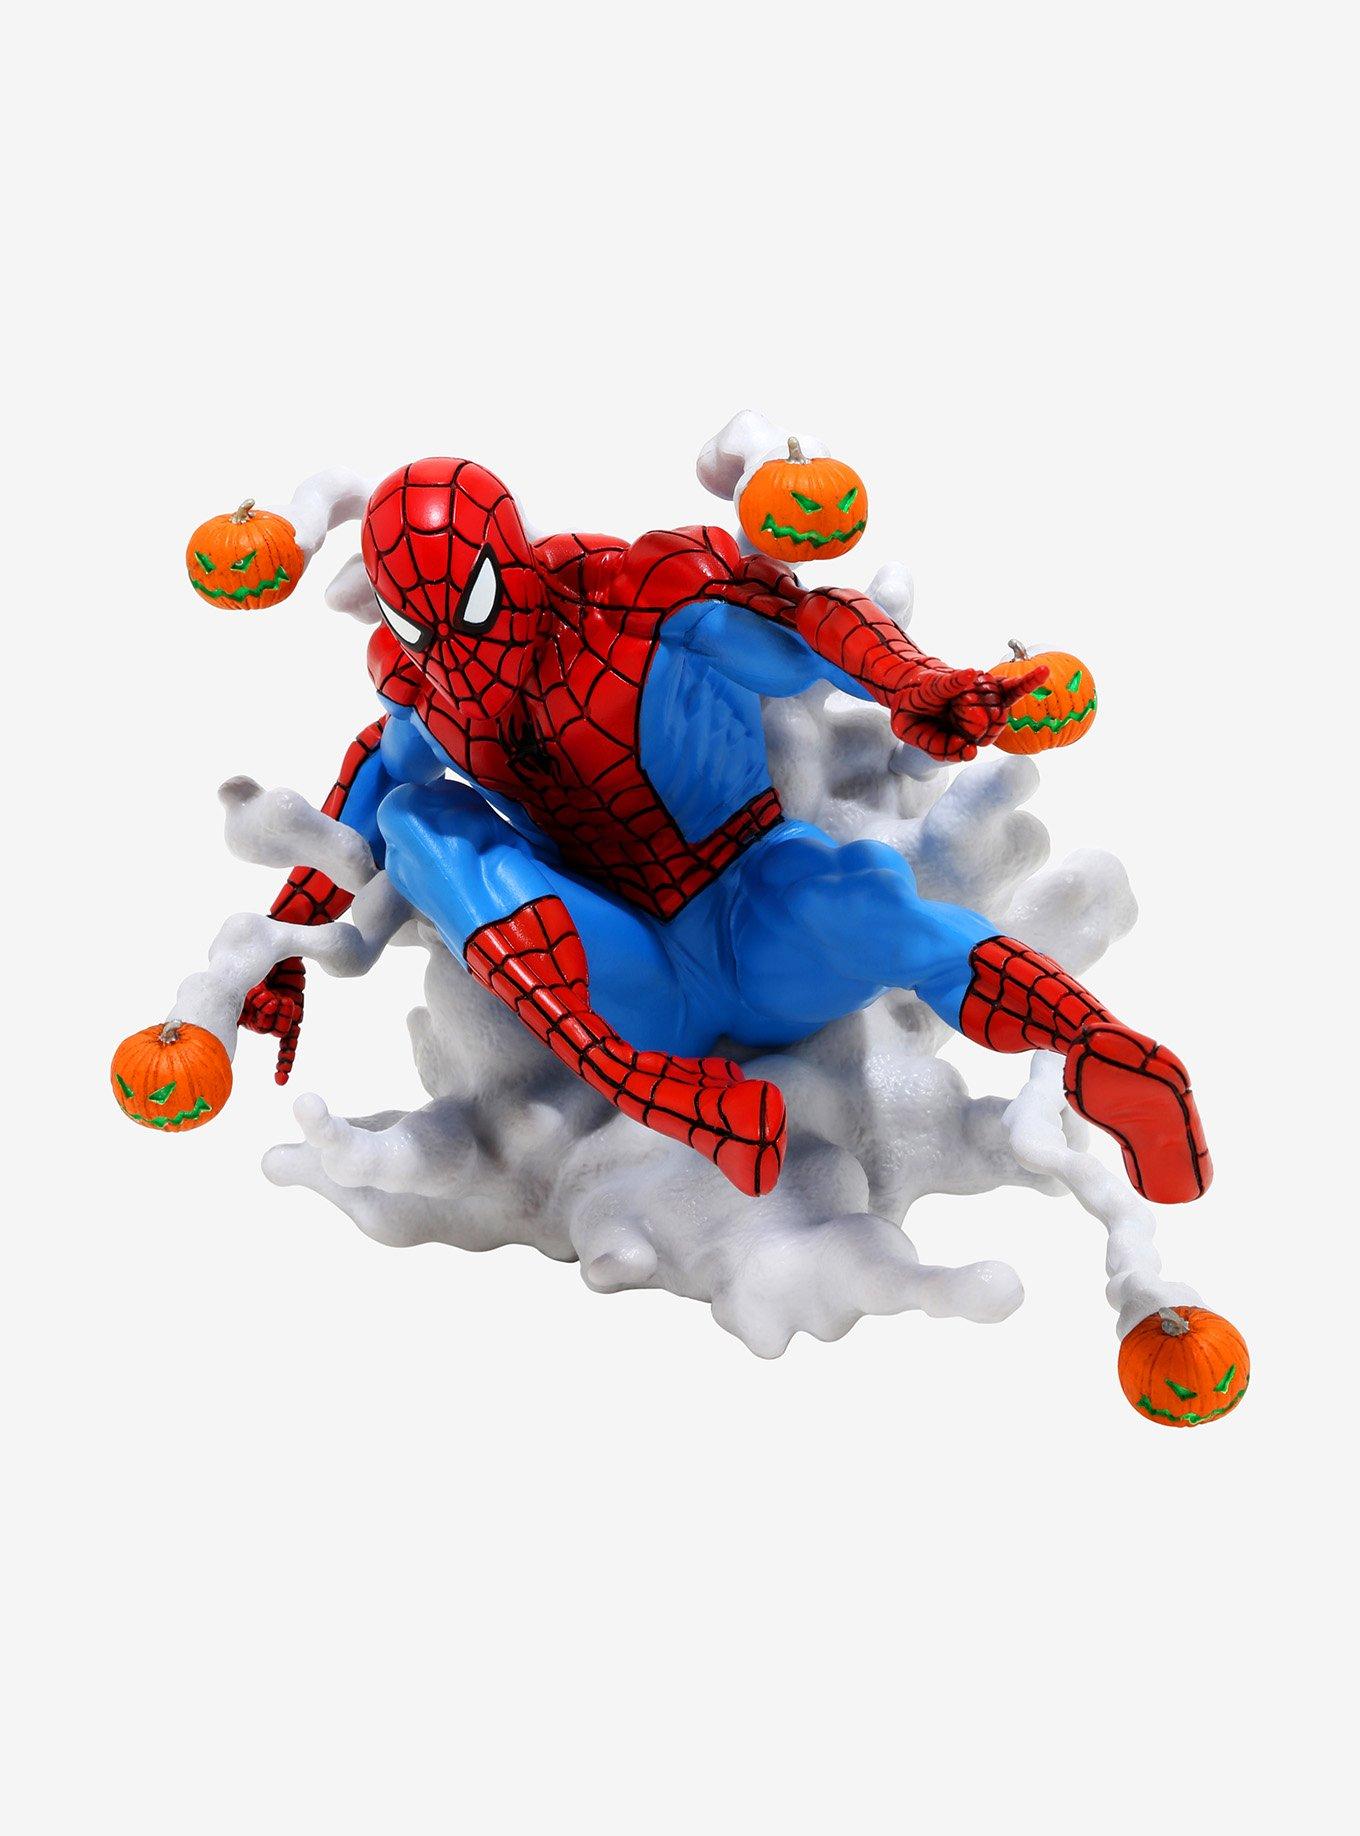 1/8 DIAMOND SELECT TOYS Marvel Gallery Pumpkin Bomb Spider-Man PVC 16cm 699788839027 Statue